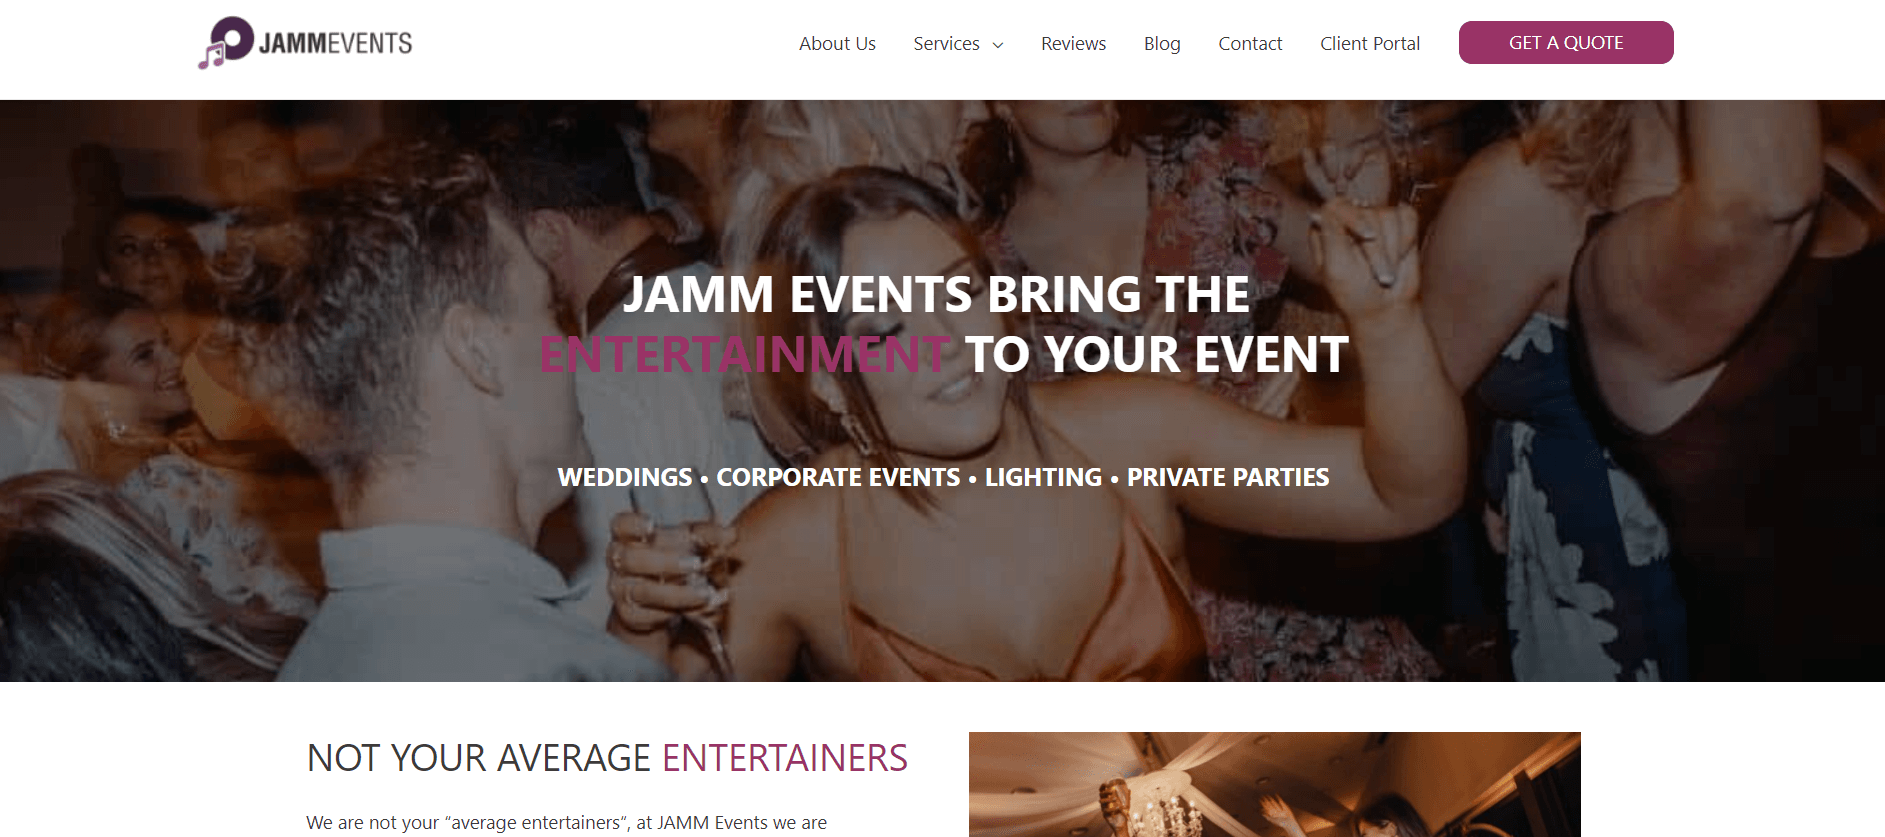 jamm events